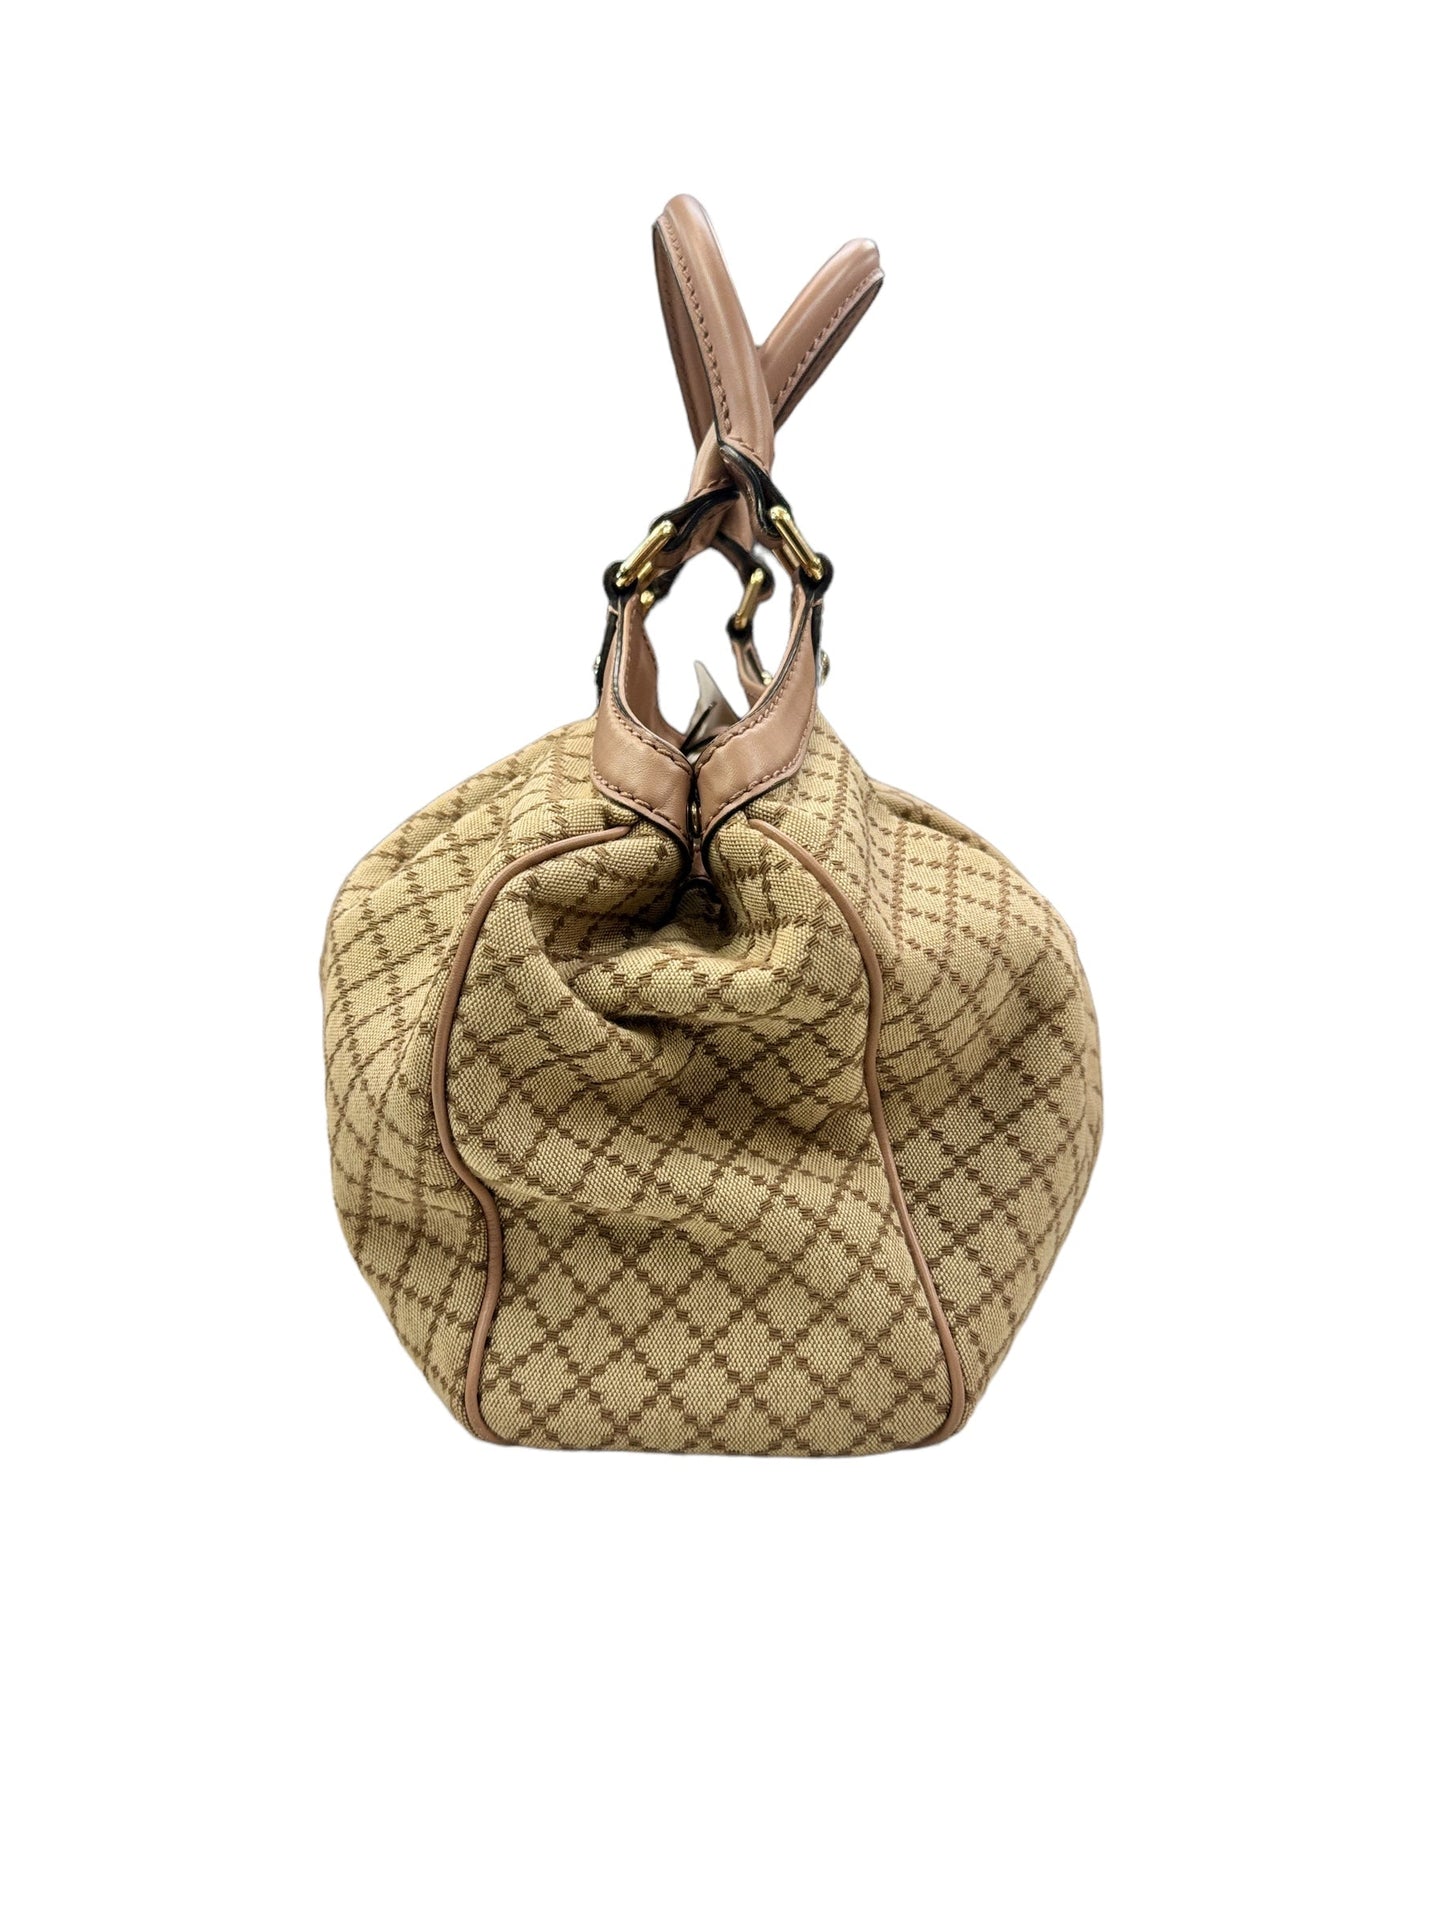 Handbag By Gucci  Size: Medium